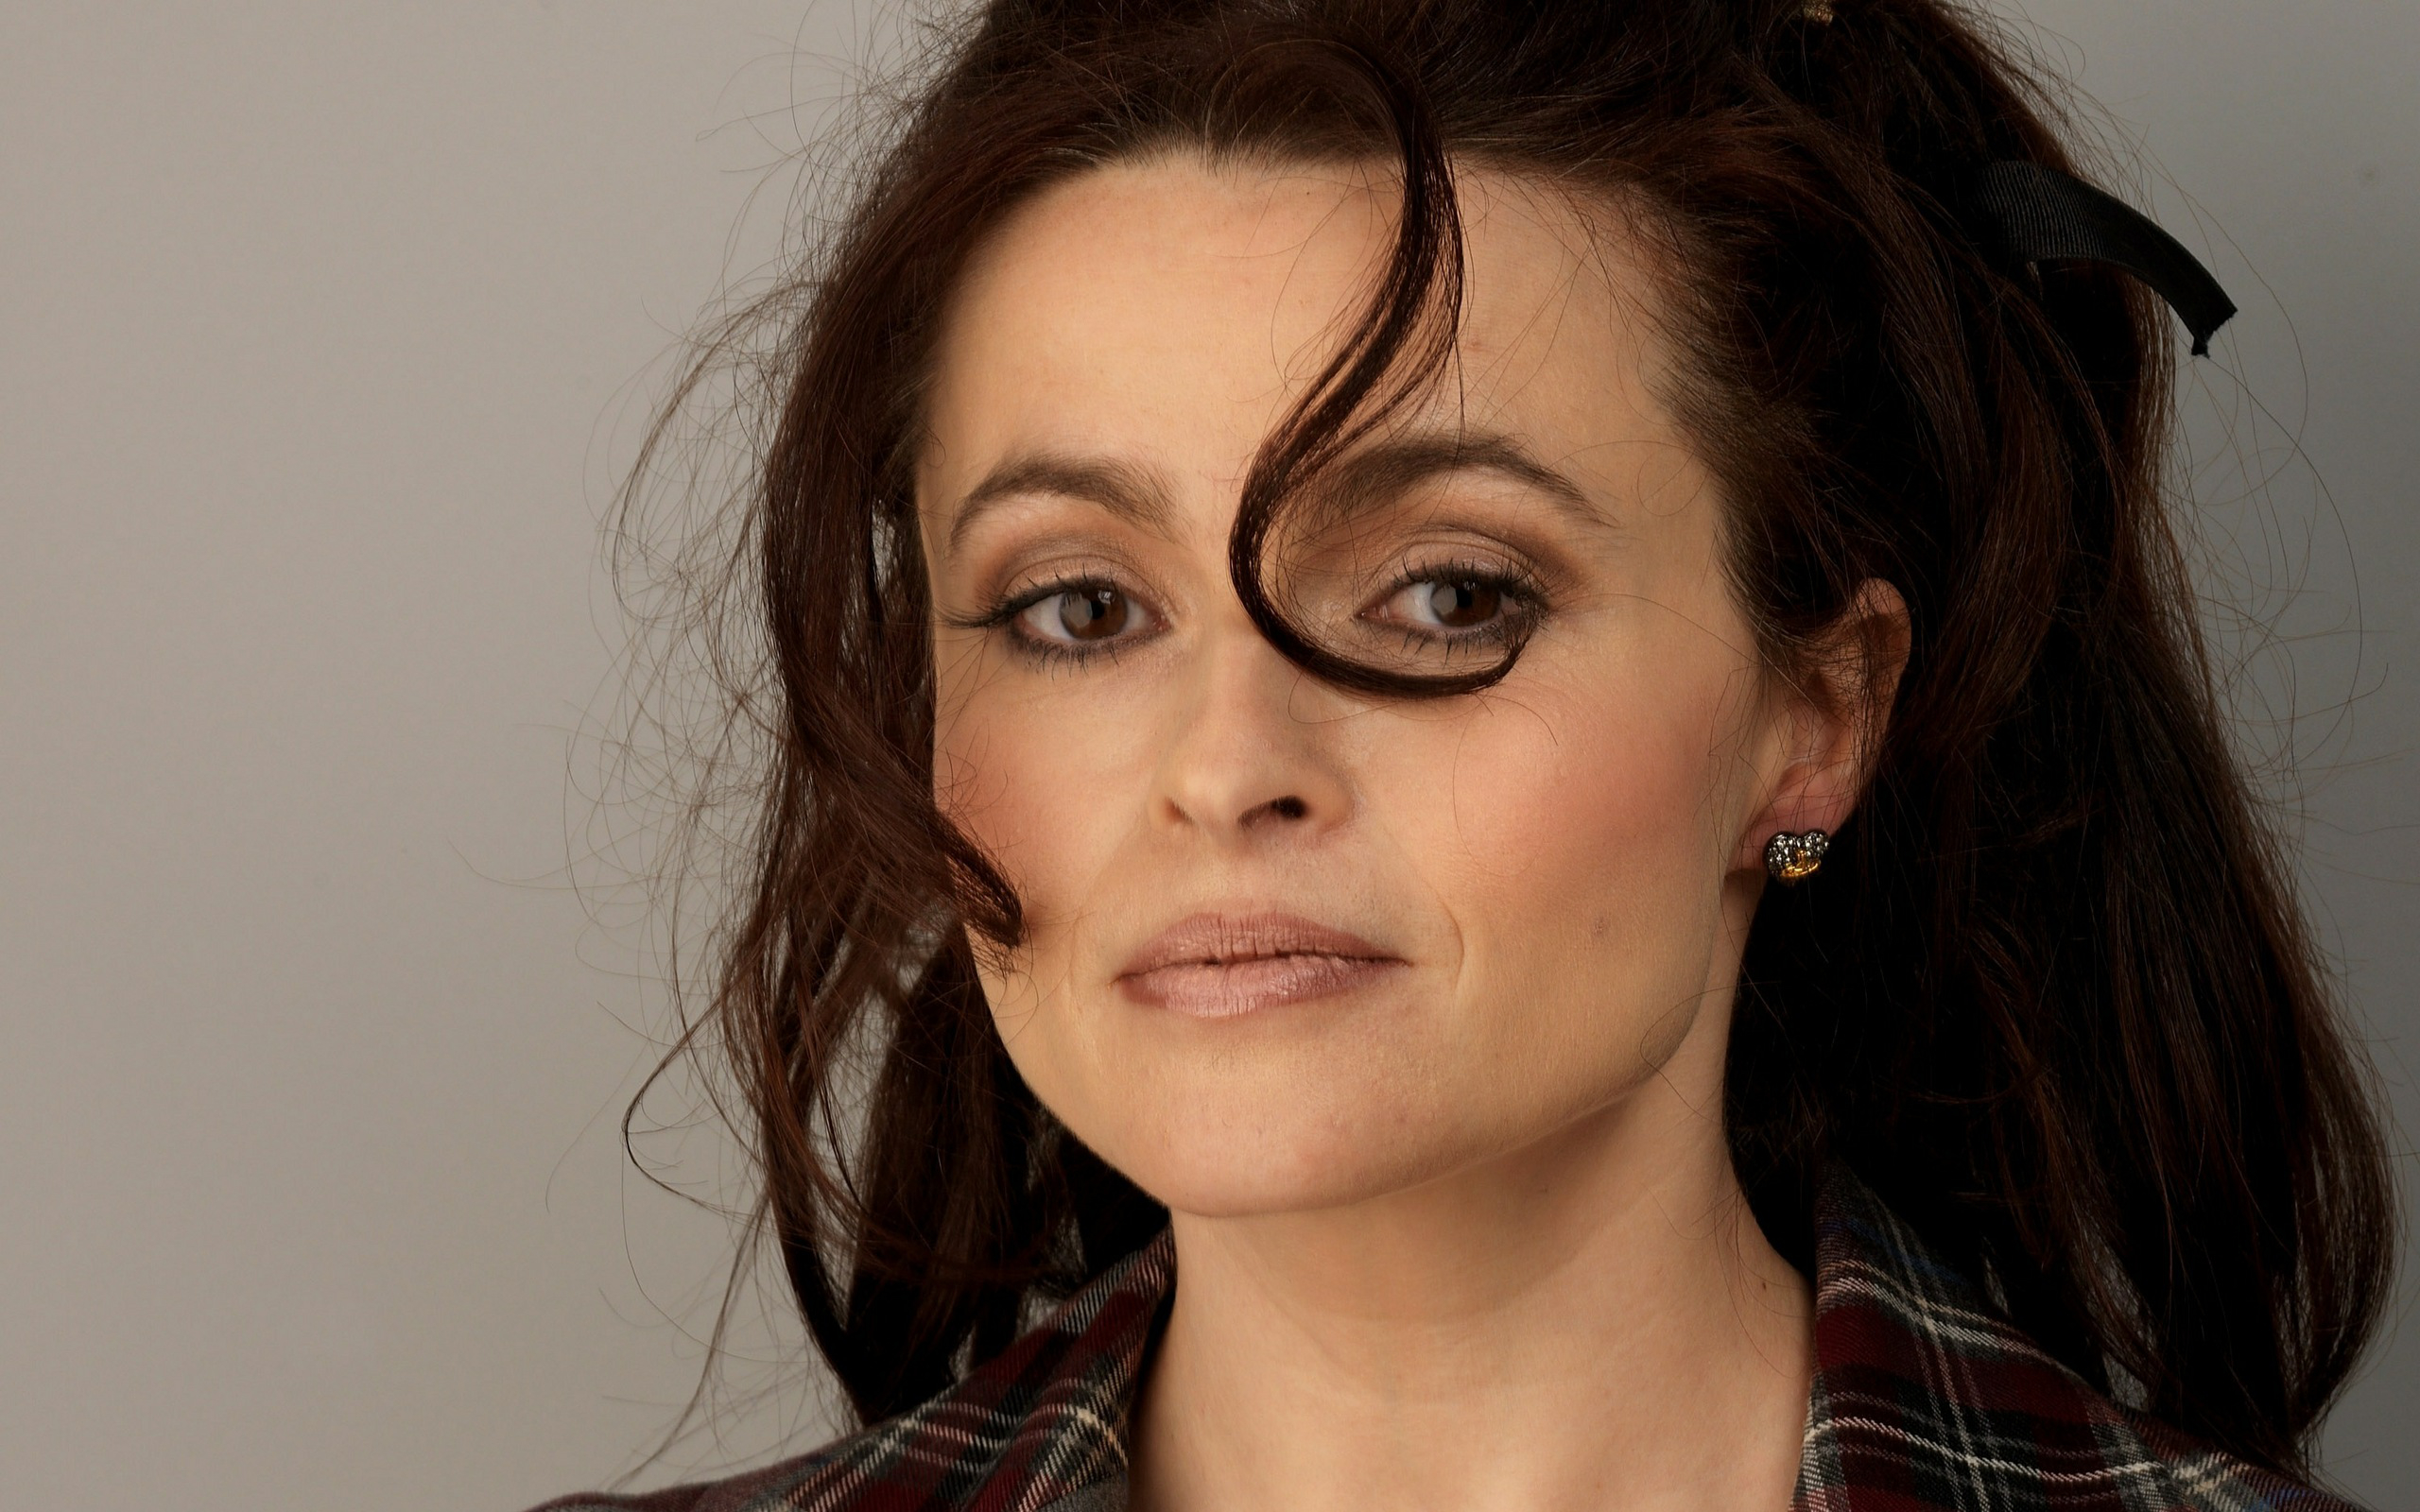 Changing styles Helena Bonham Carter  Heart